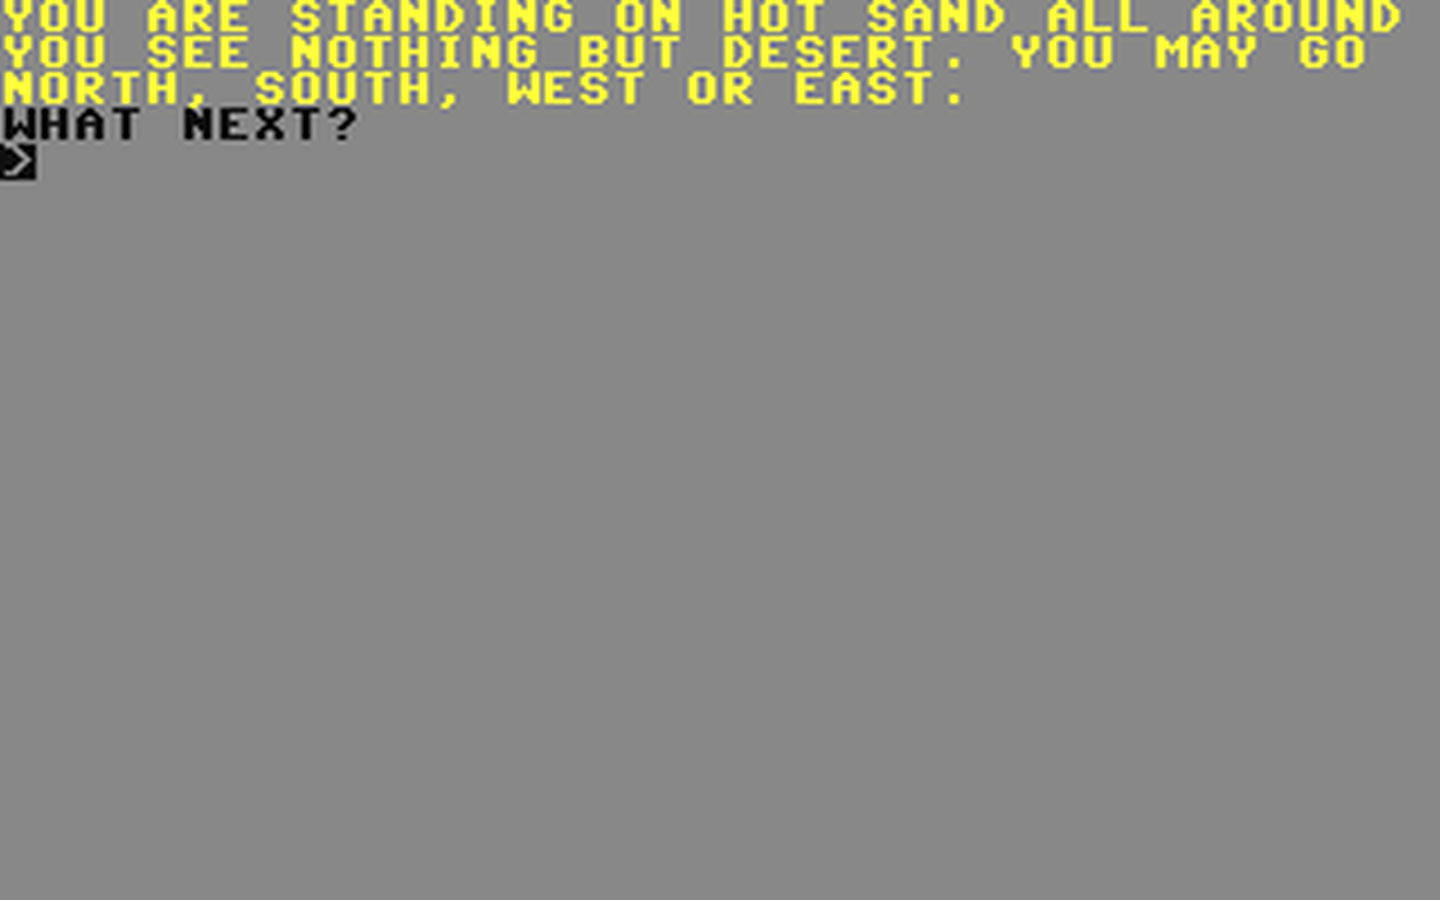 C64 GameBase Magus DND_Software 1988